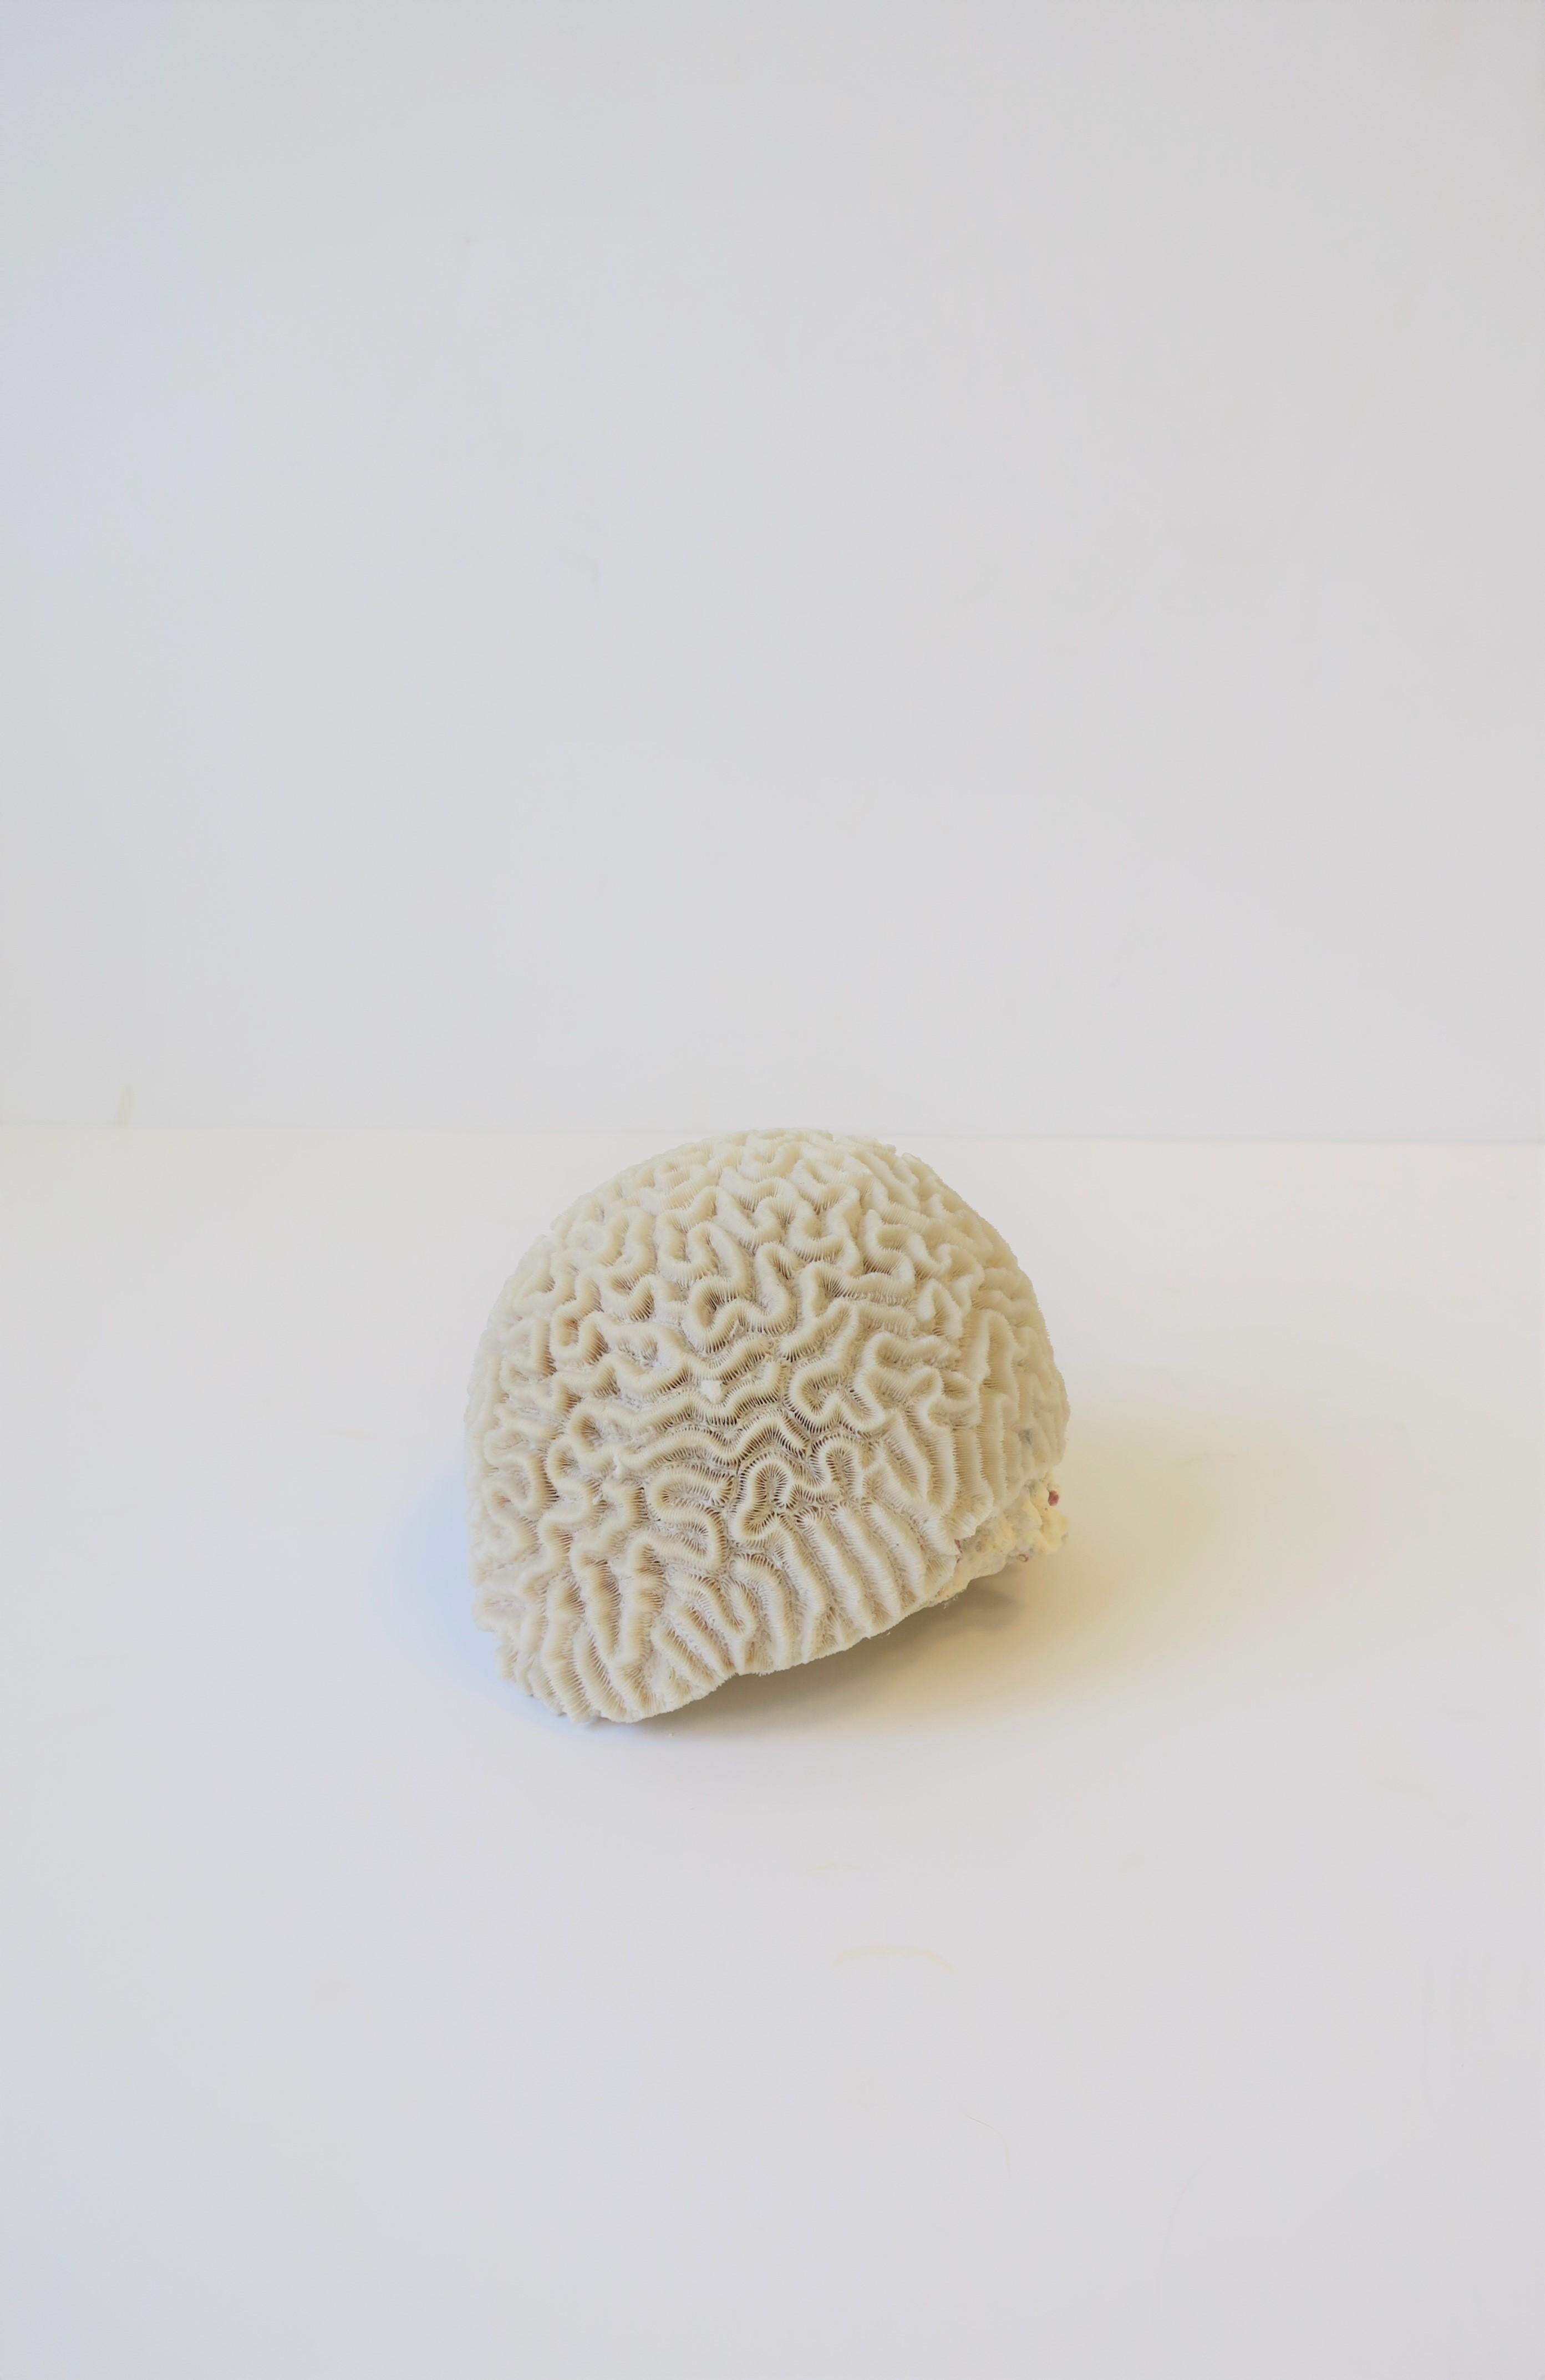 20th Century Natural White Brain Coral